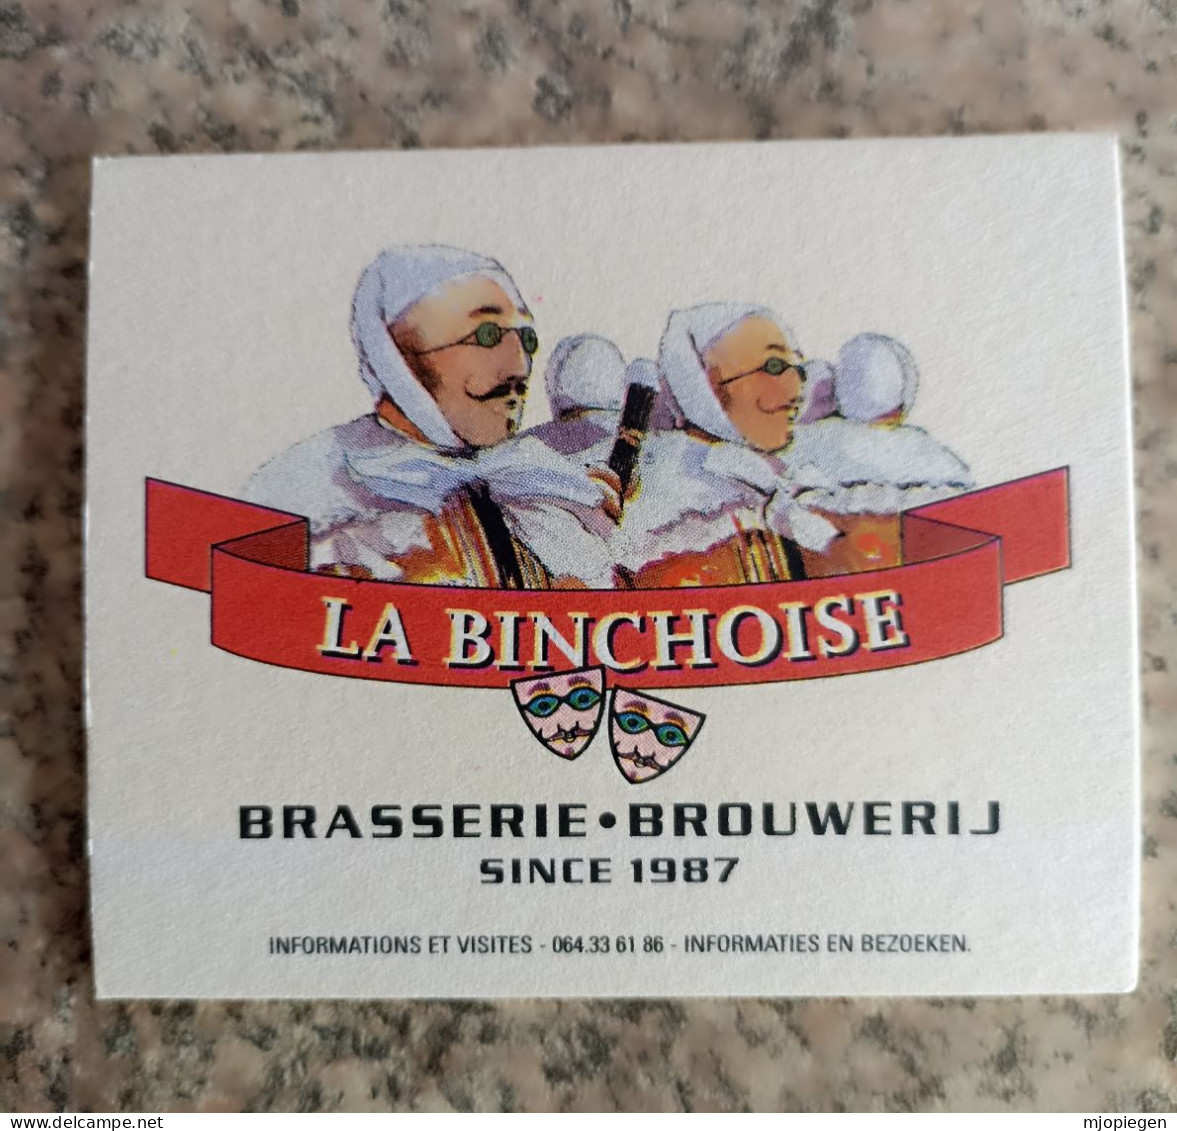 La Binchoise - Beer Mats